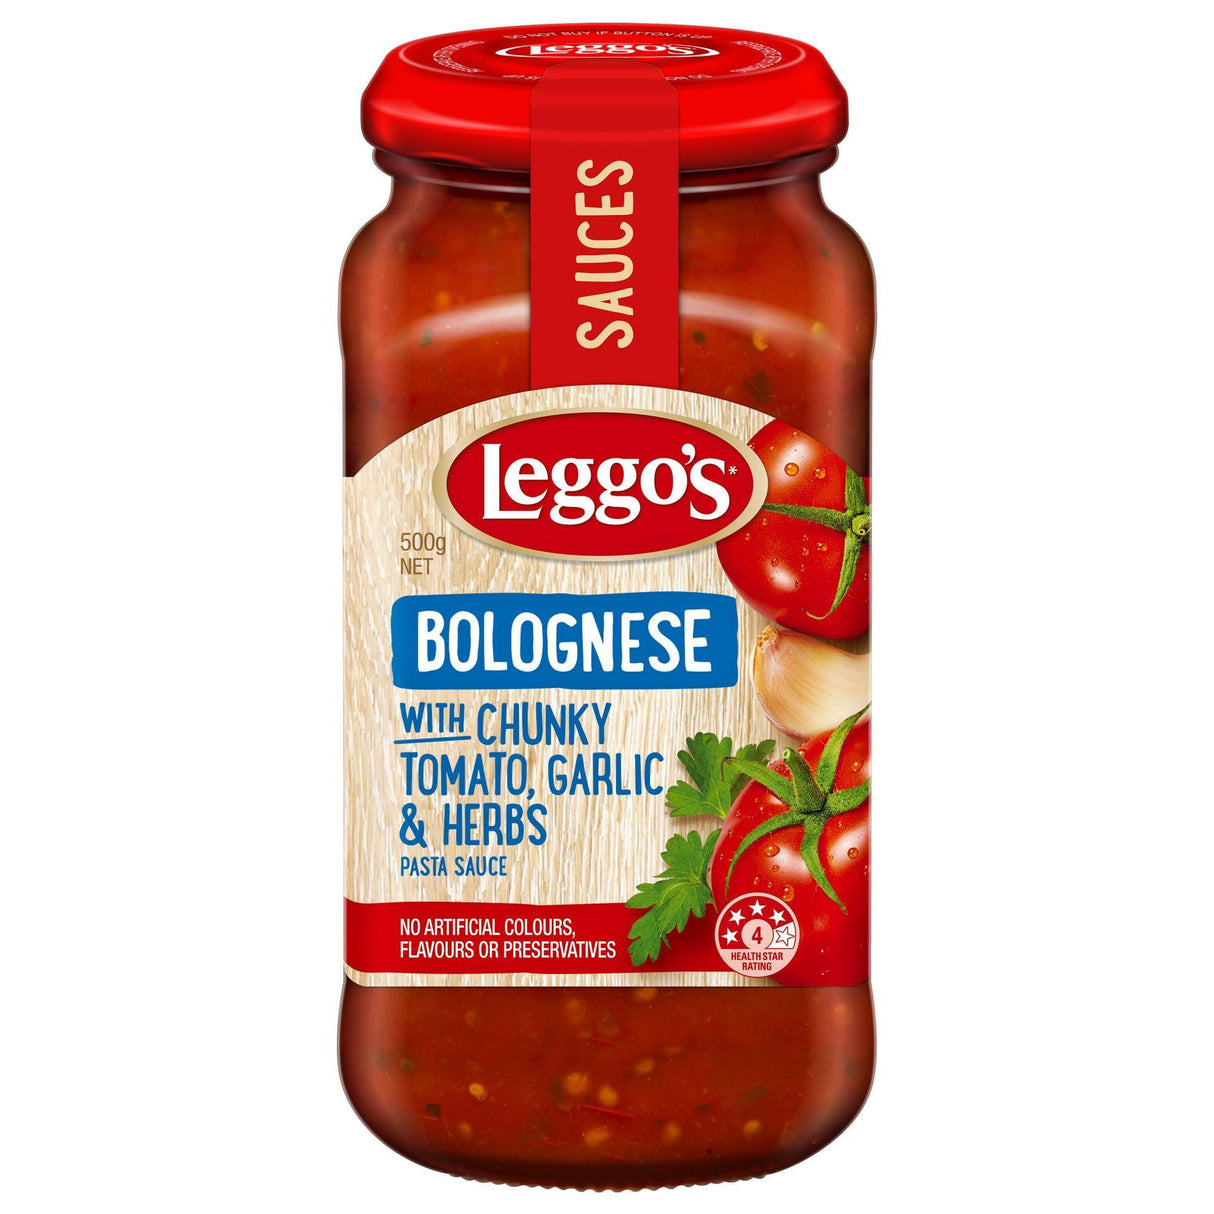 Leggos Bolognese With Chunky Tomato Garlic & Herbs Pasta Sauce 500g